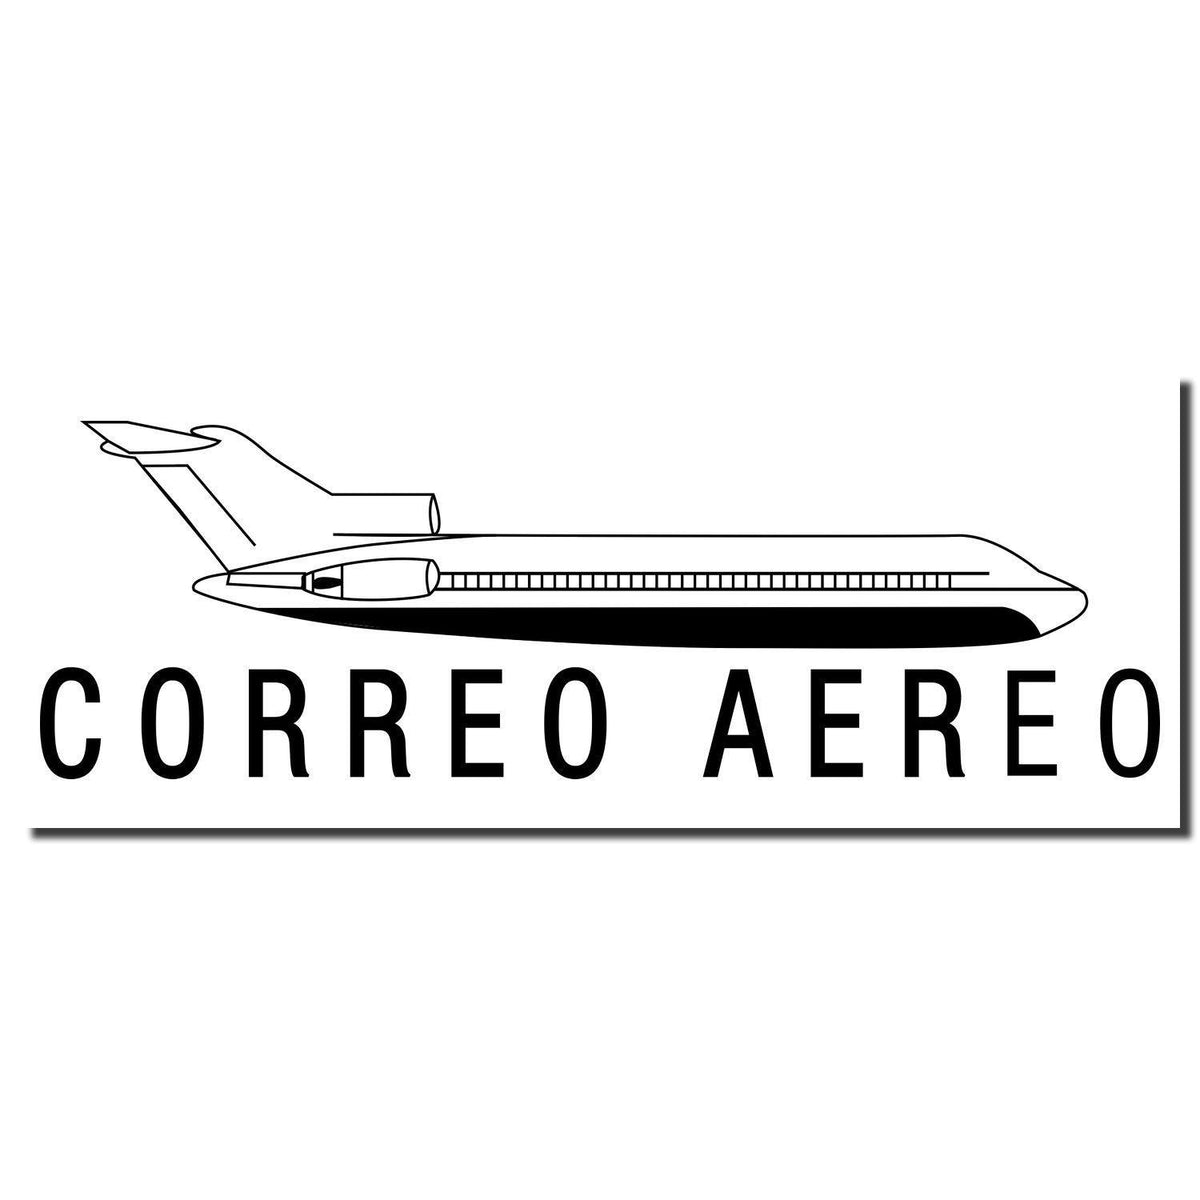 Enlarged Imprint Large Correo Aero Rubber Stamp Sample